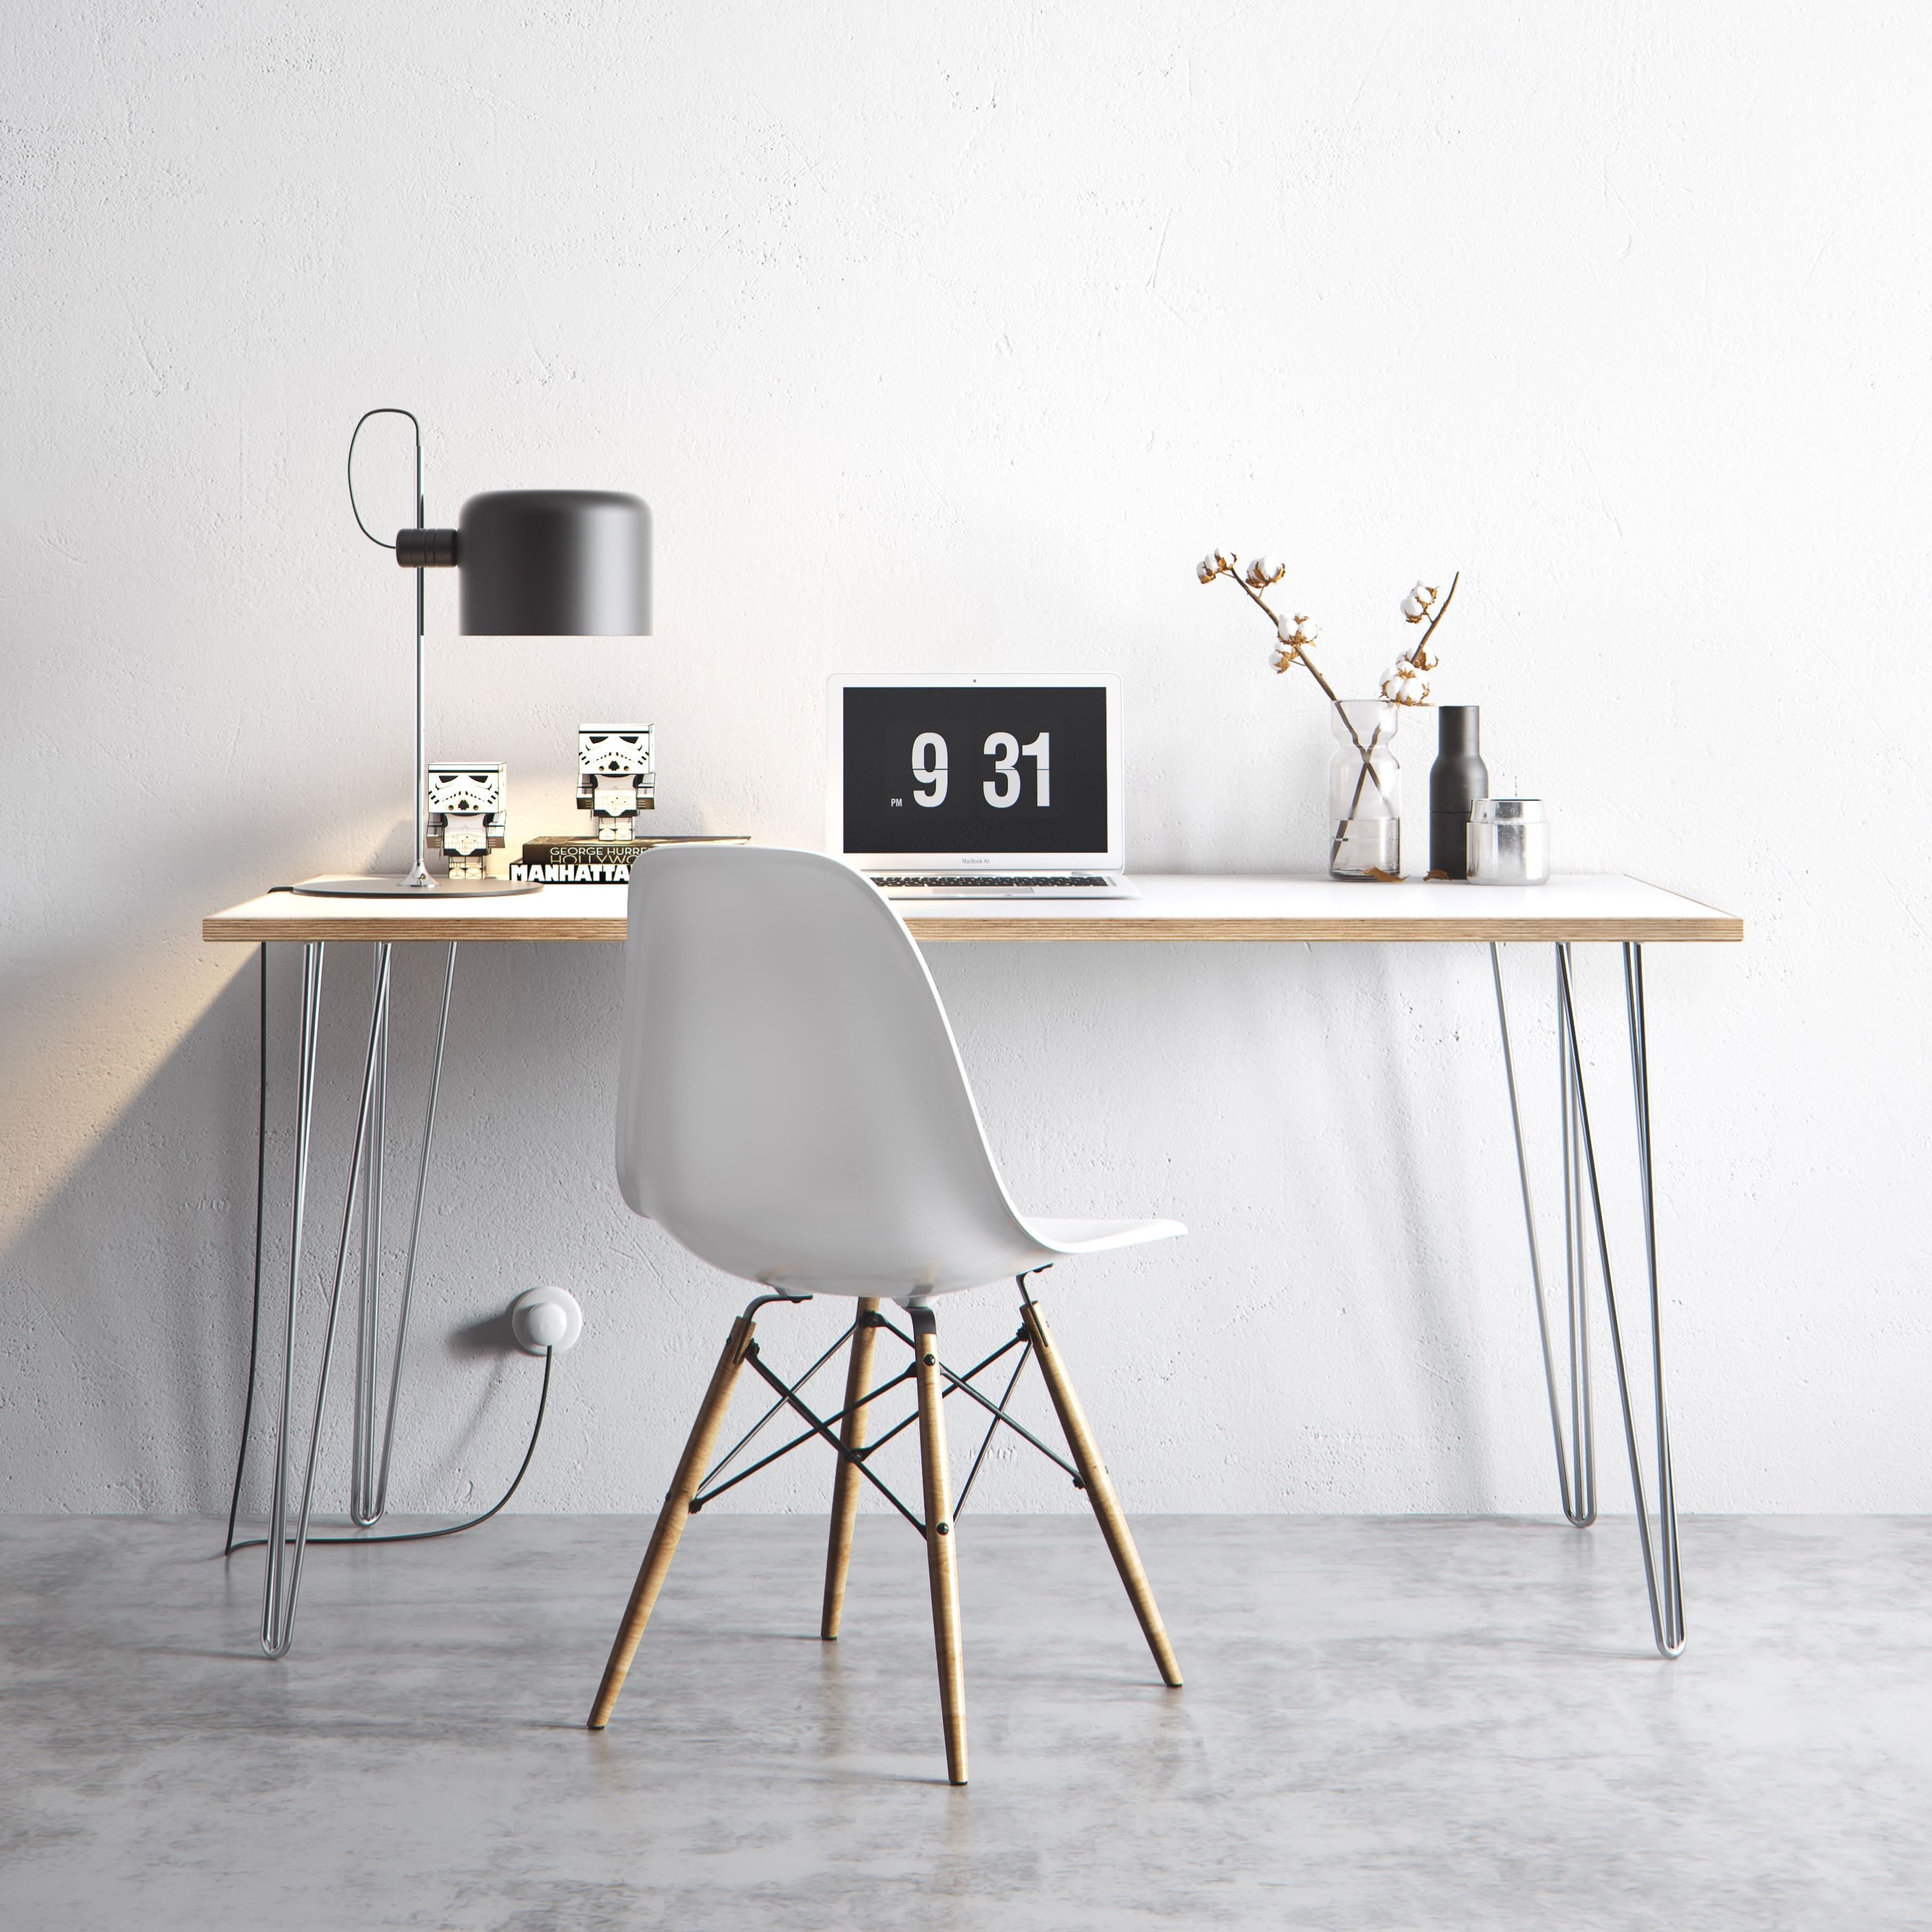 71cm Hairpin Legs - Desk & Dining Table